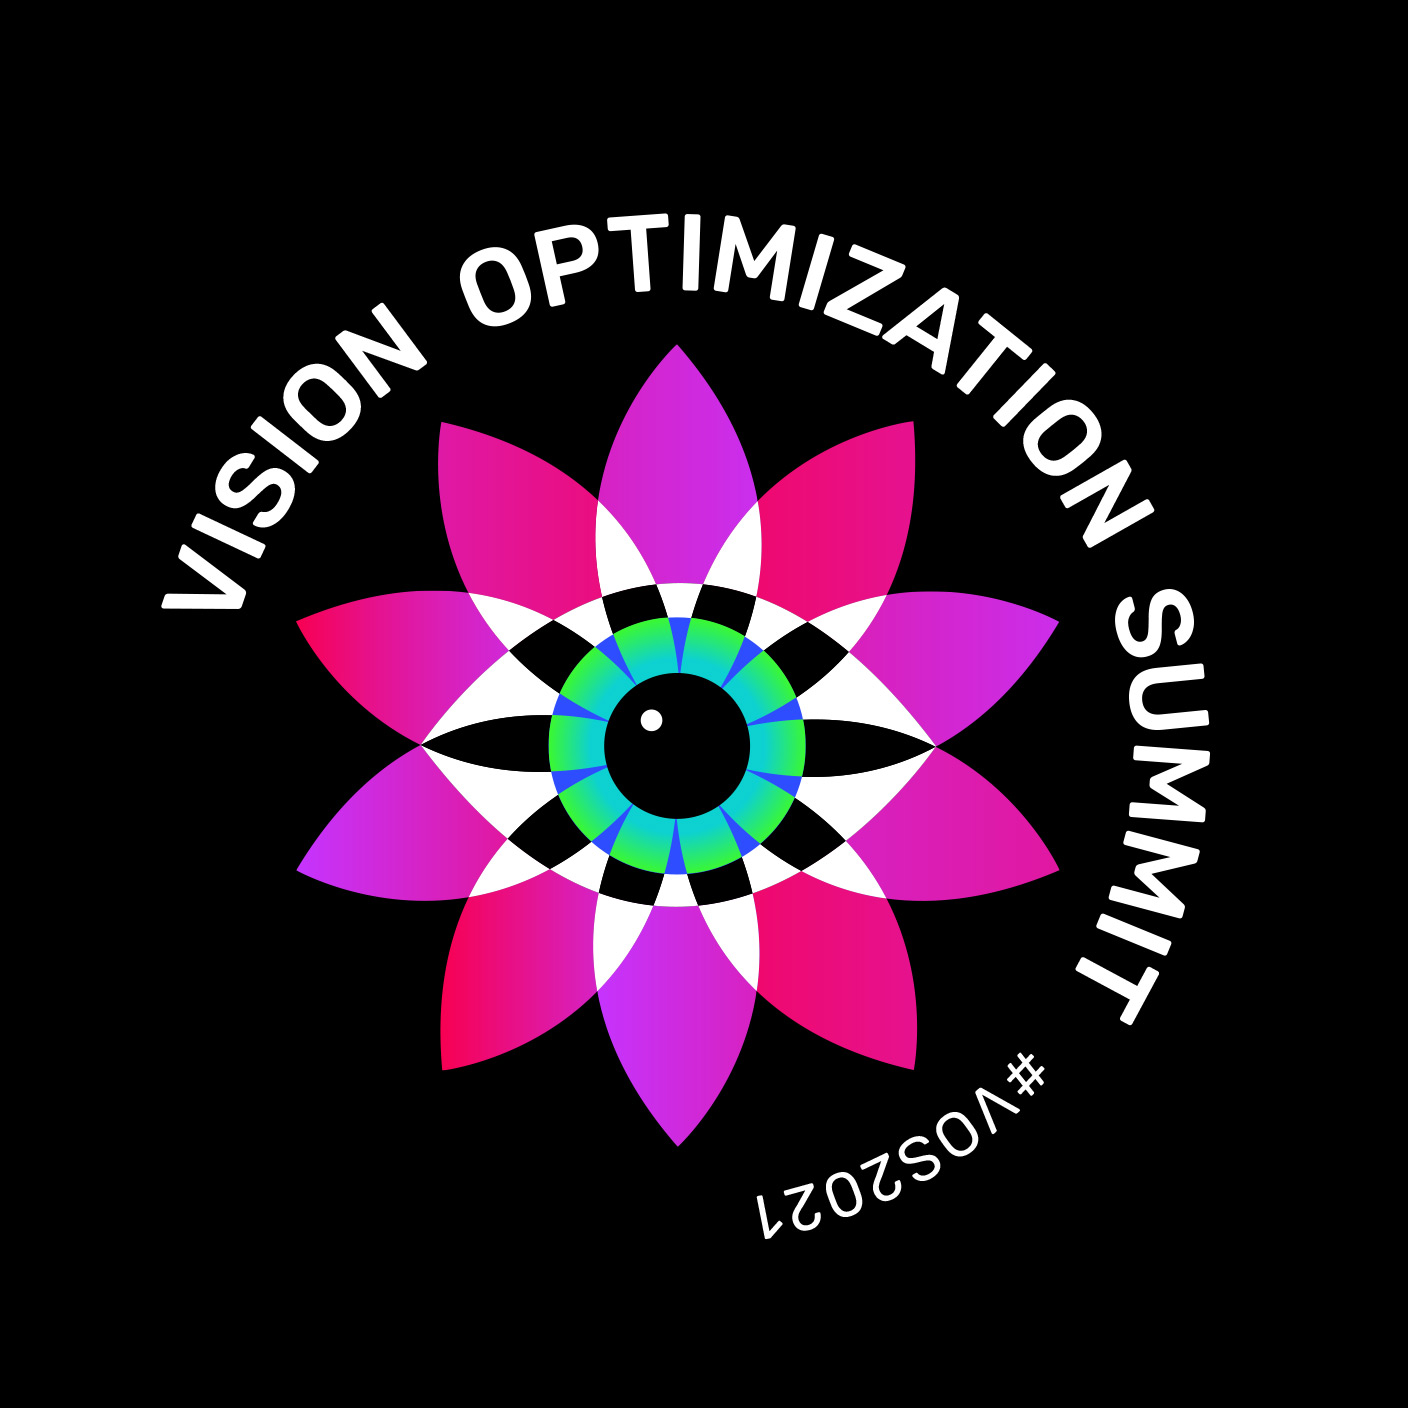 vision-optimization-summit-toronto-logo-designer-conference